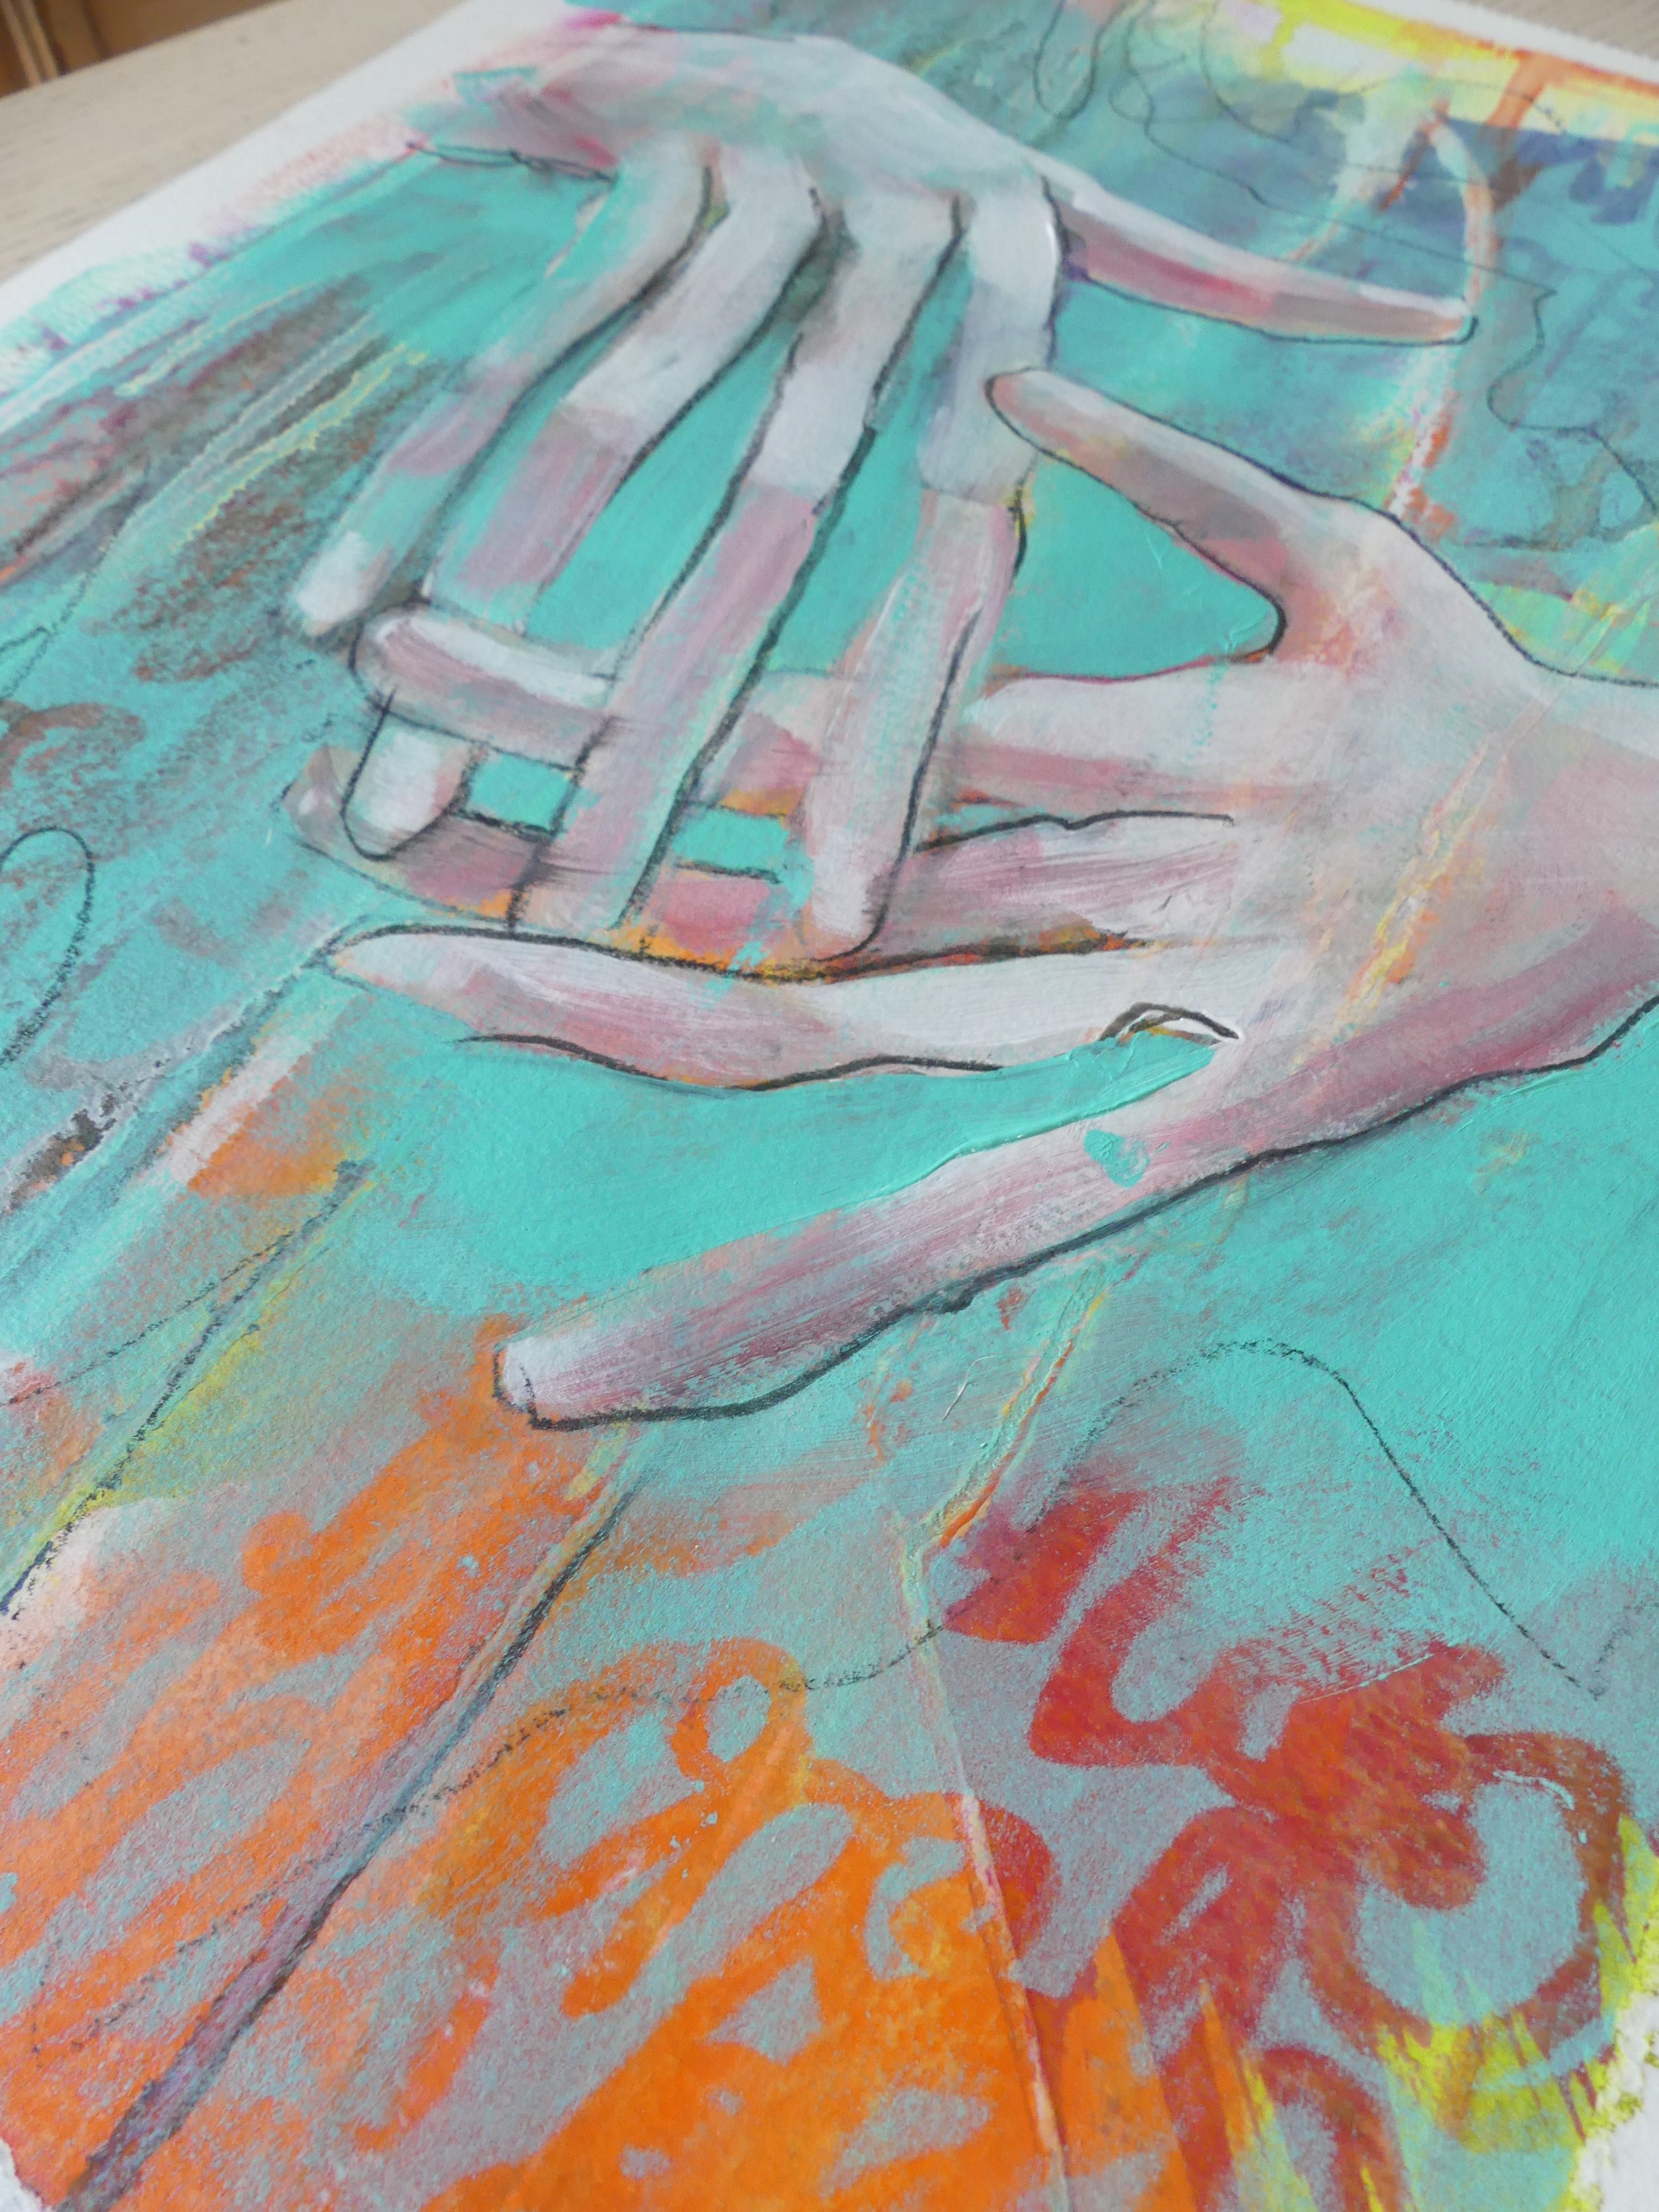 Painting hands with Emma Petitt